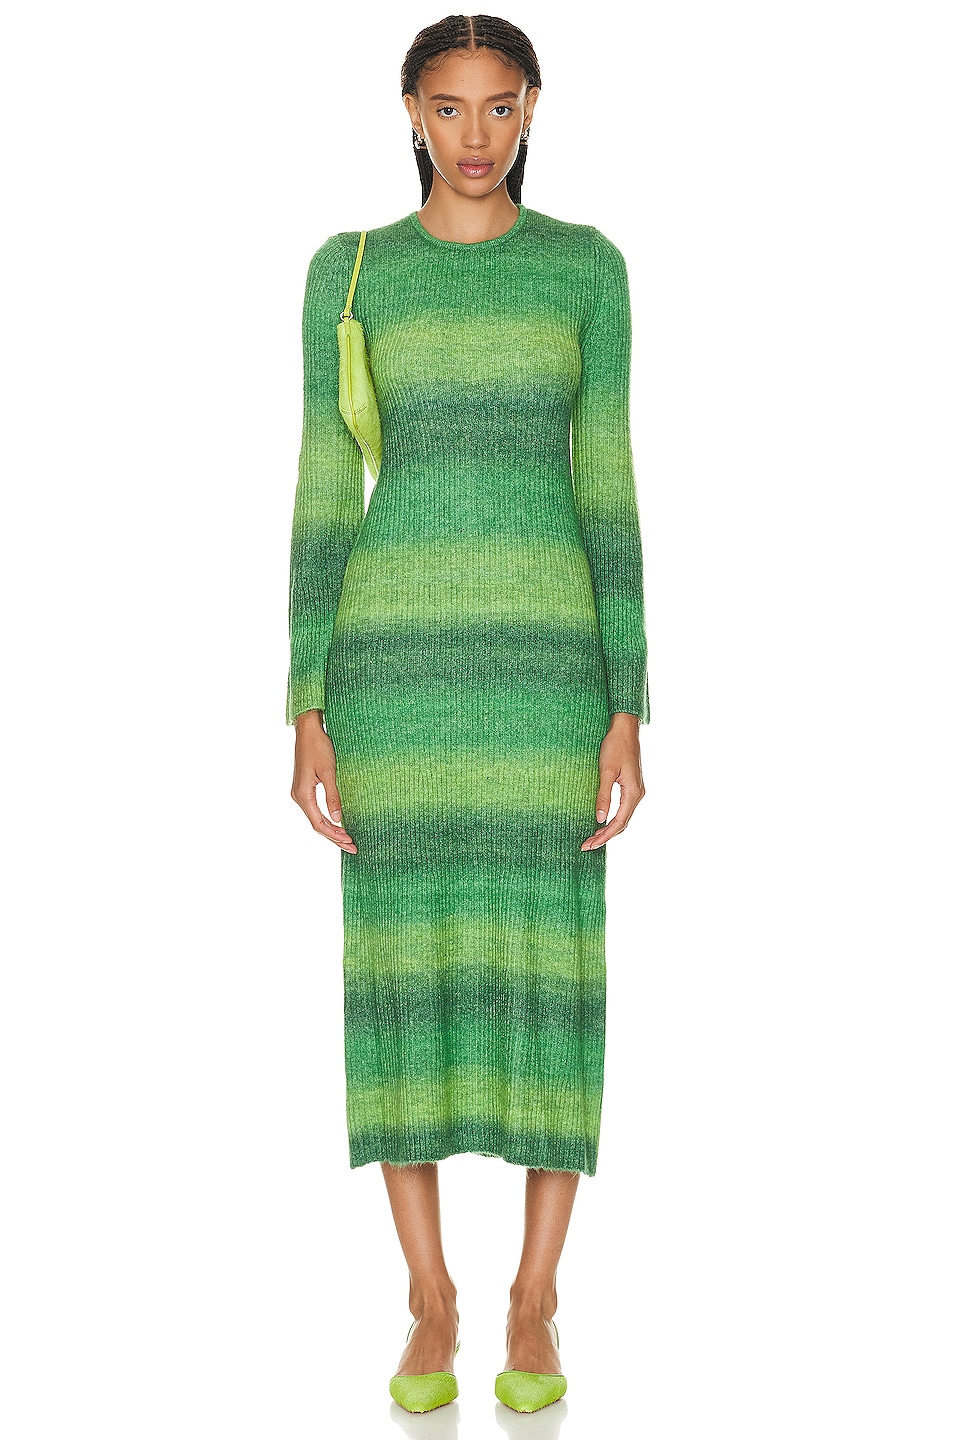 Simon Miller Axon Dress in Gummy Green Multi | FWRD